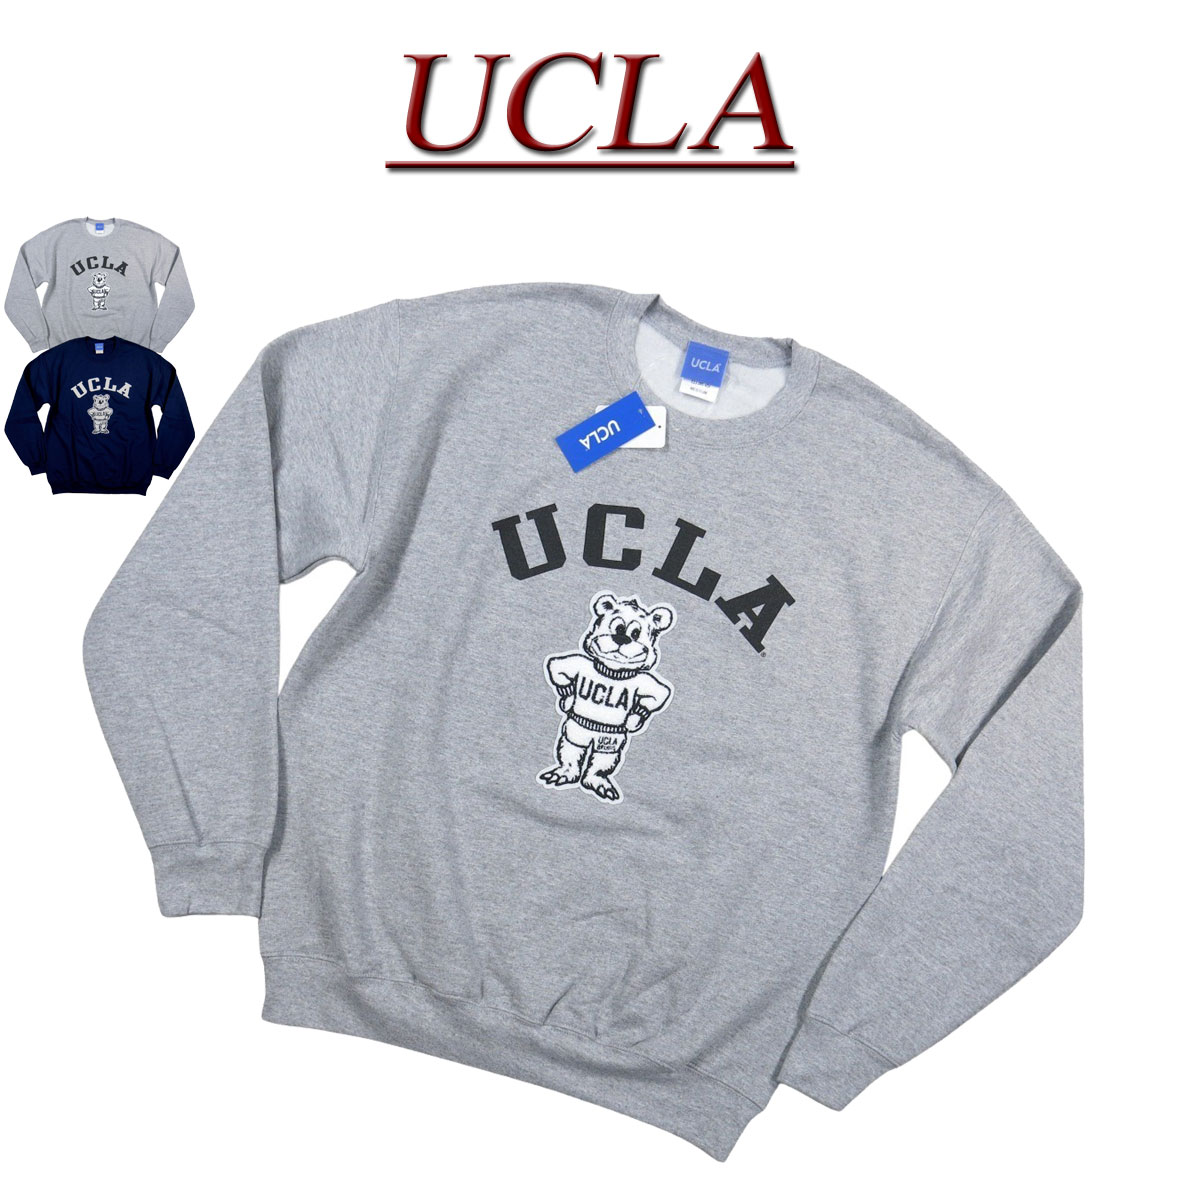  jf791 新品 UCLA ユーシーエルエー カレッジプリント さがら刺繍 裏起毛 スウェットシャツ UCLA-0519 メンズ カリフォルニア大学ロサンゼルス校 L/S COLLEGE SWEATSHIRT スエット トレーナー 